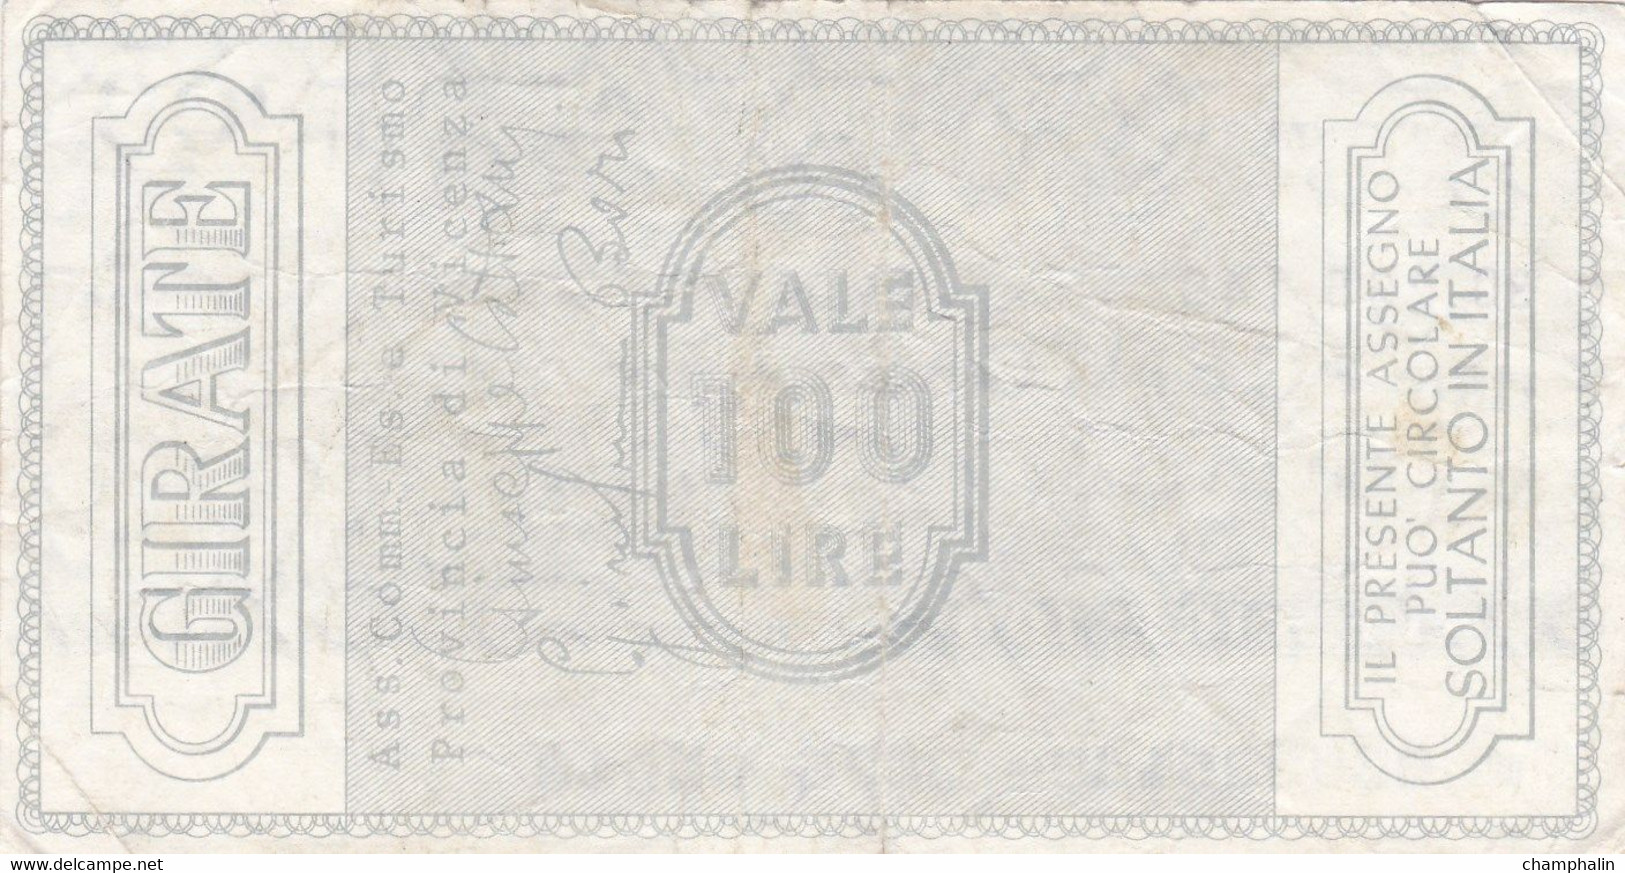 Italie - Billet De 100 Lire - Banco Cattolica Del Veneto - 4 Août 1976 - Emissions Provisionnelles - Chèque - [ 4] Emisiones Provisionales